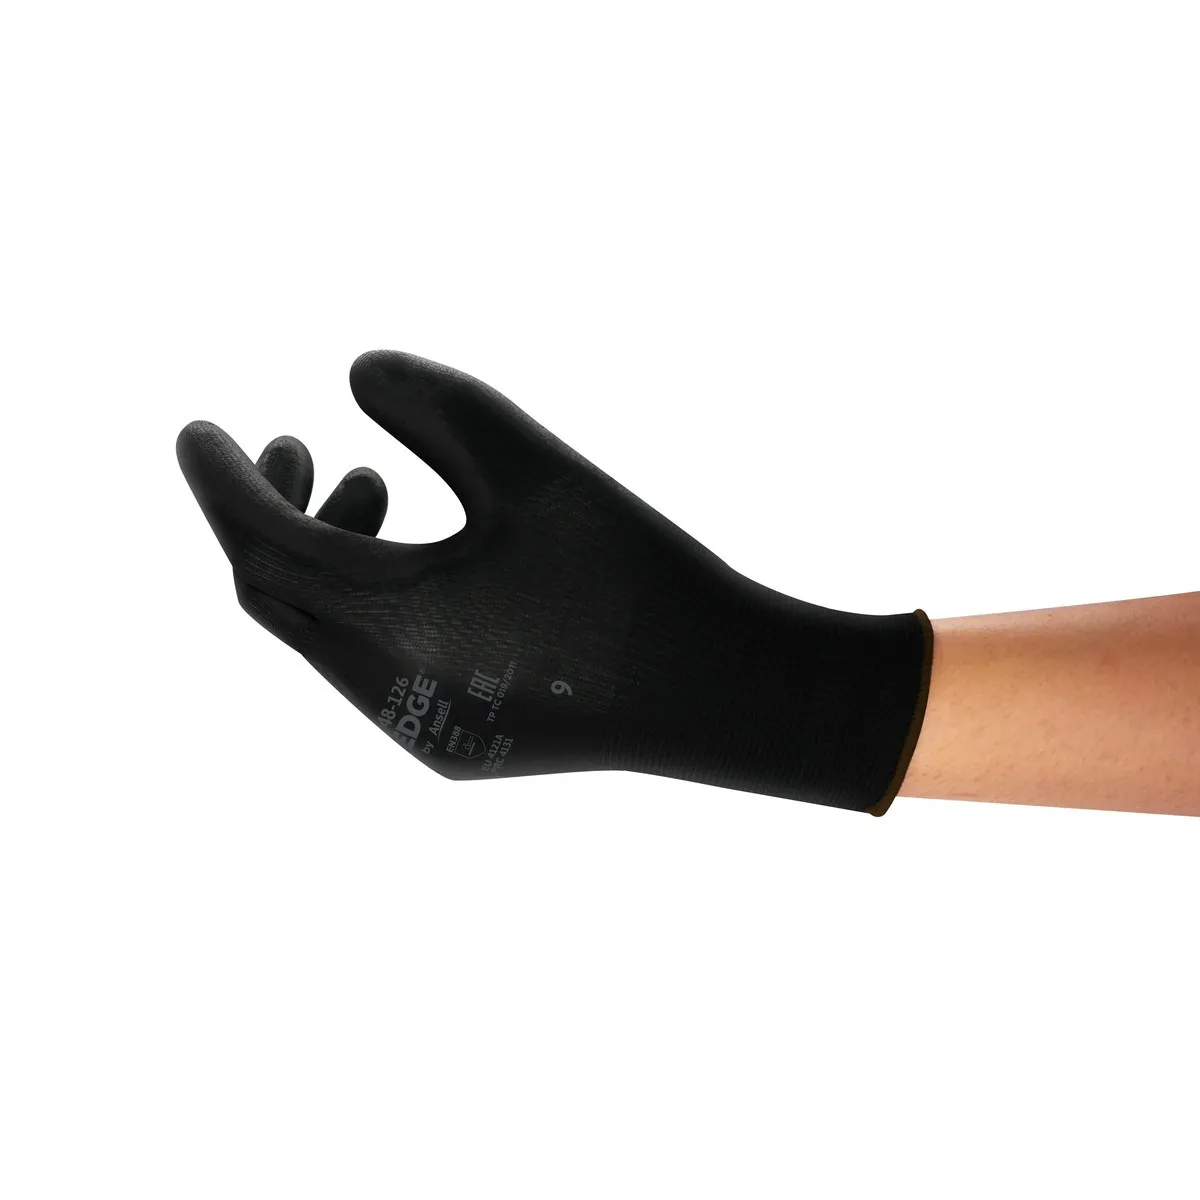 Zaštitne rukavice EDGE 48-126 crne - Ansell - PAR 